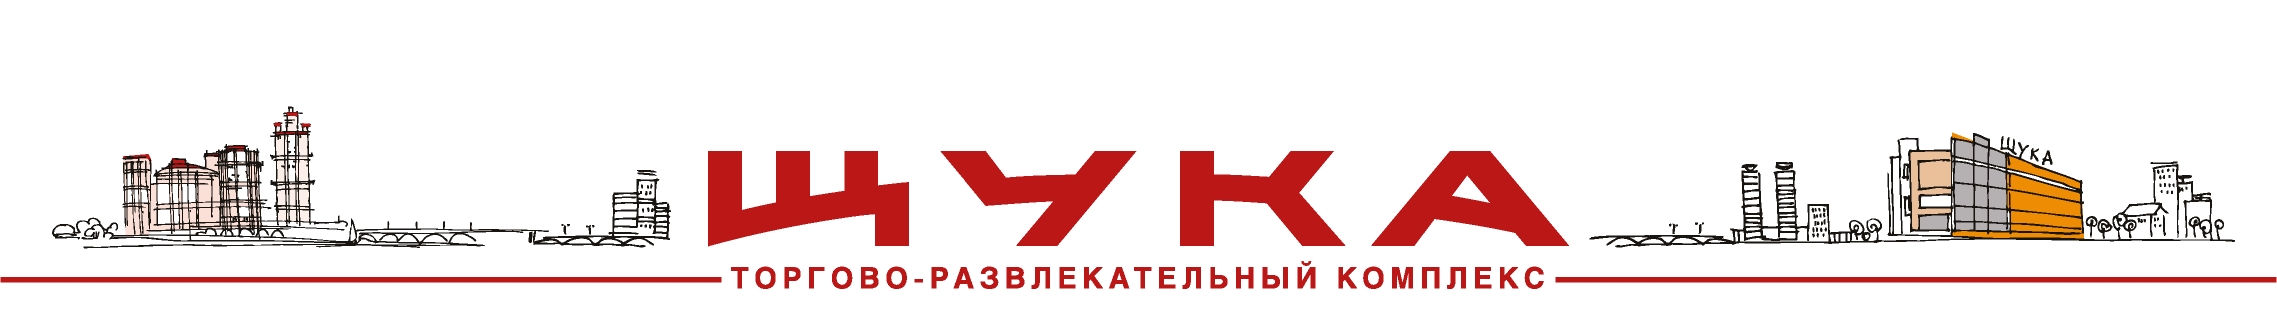 логотип ТЦ Щука